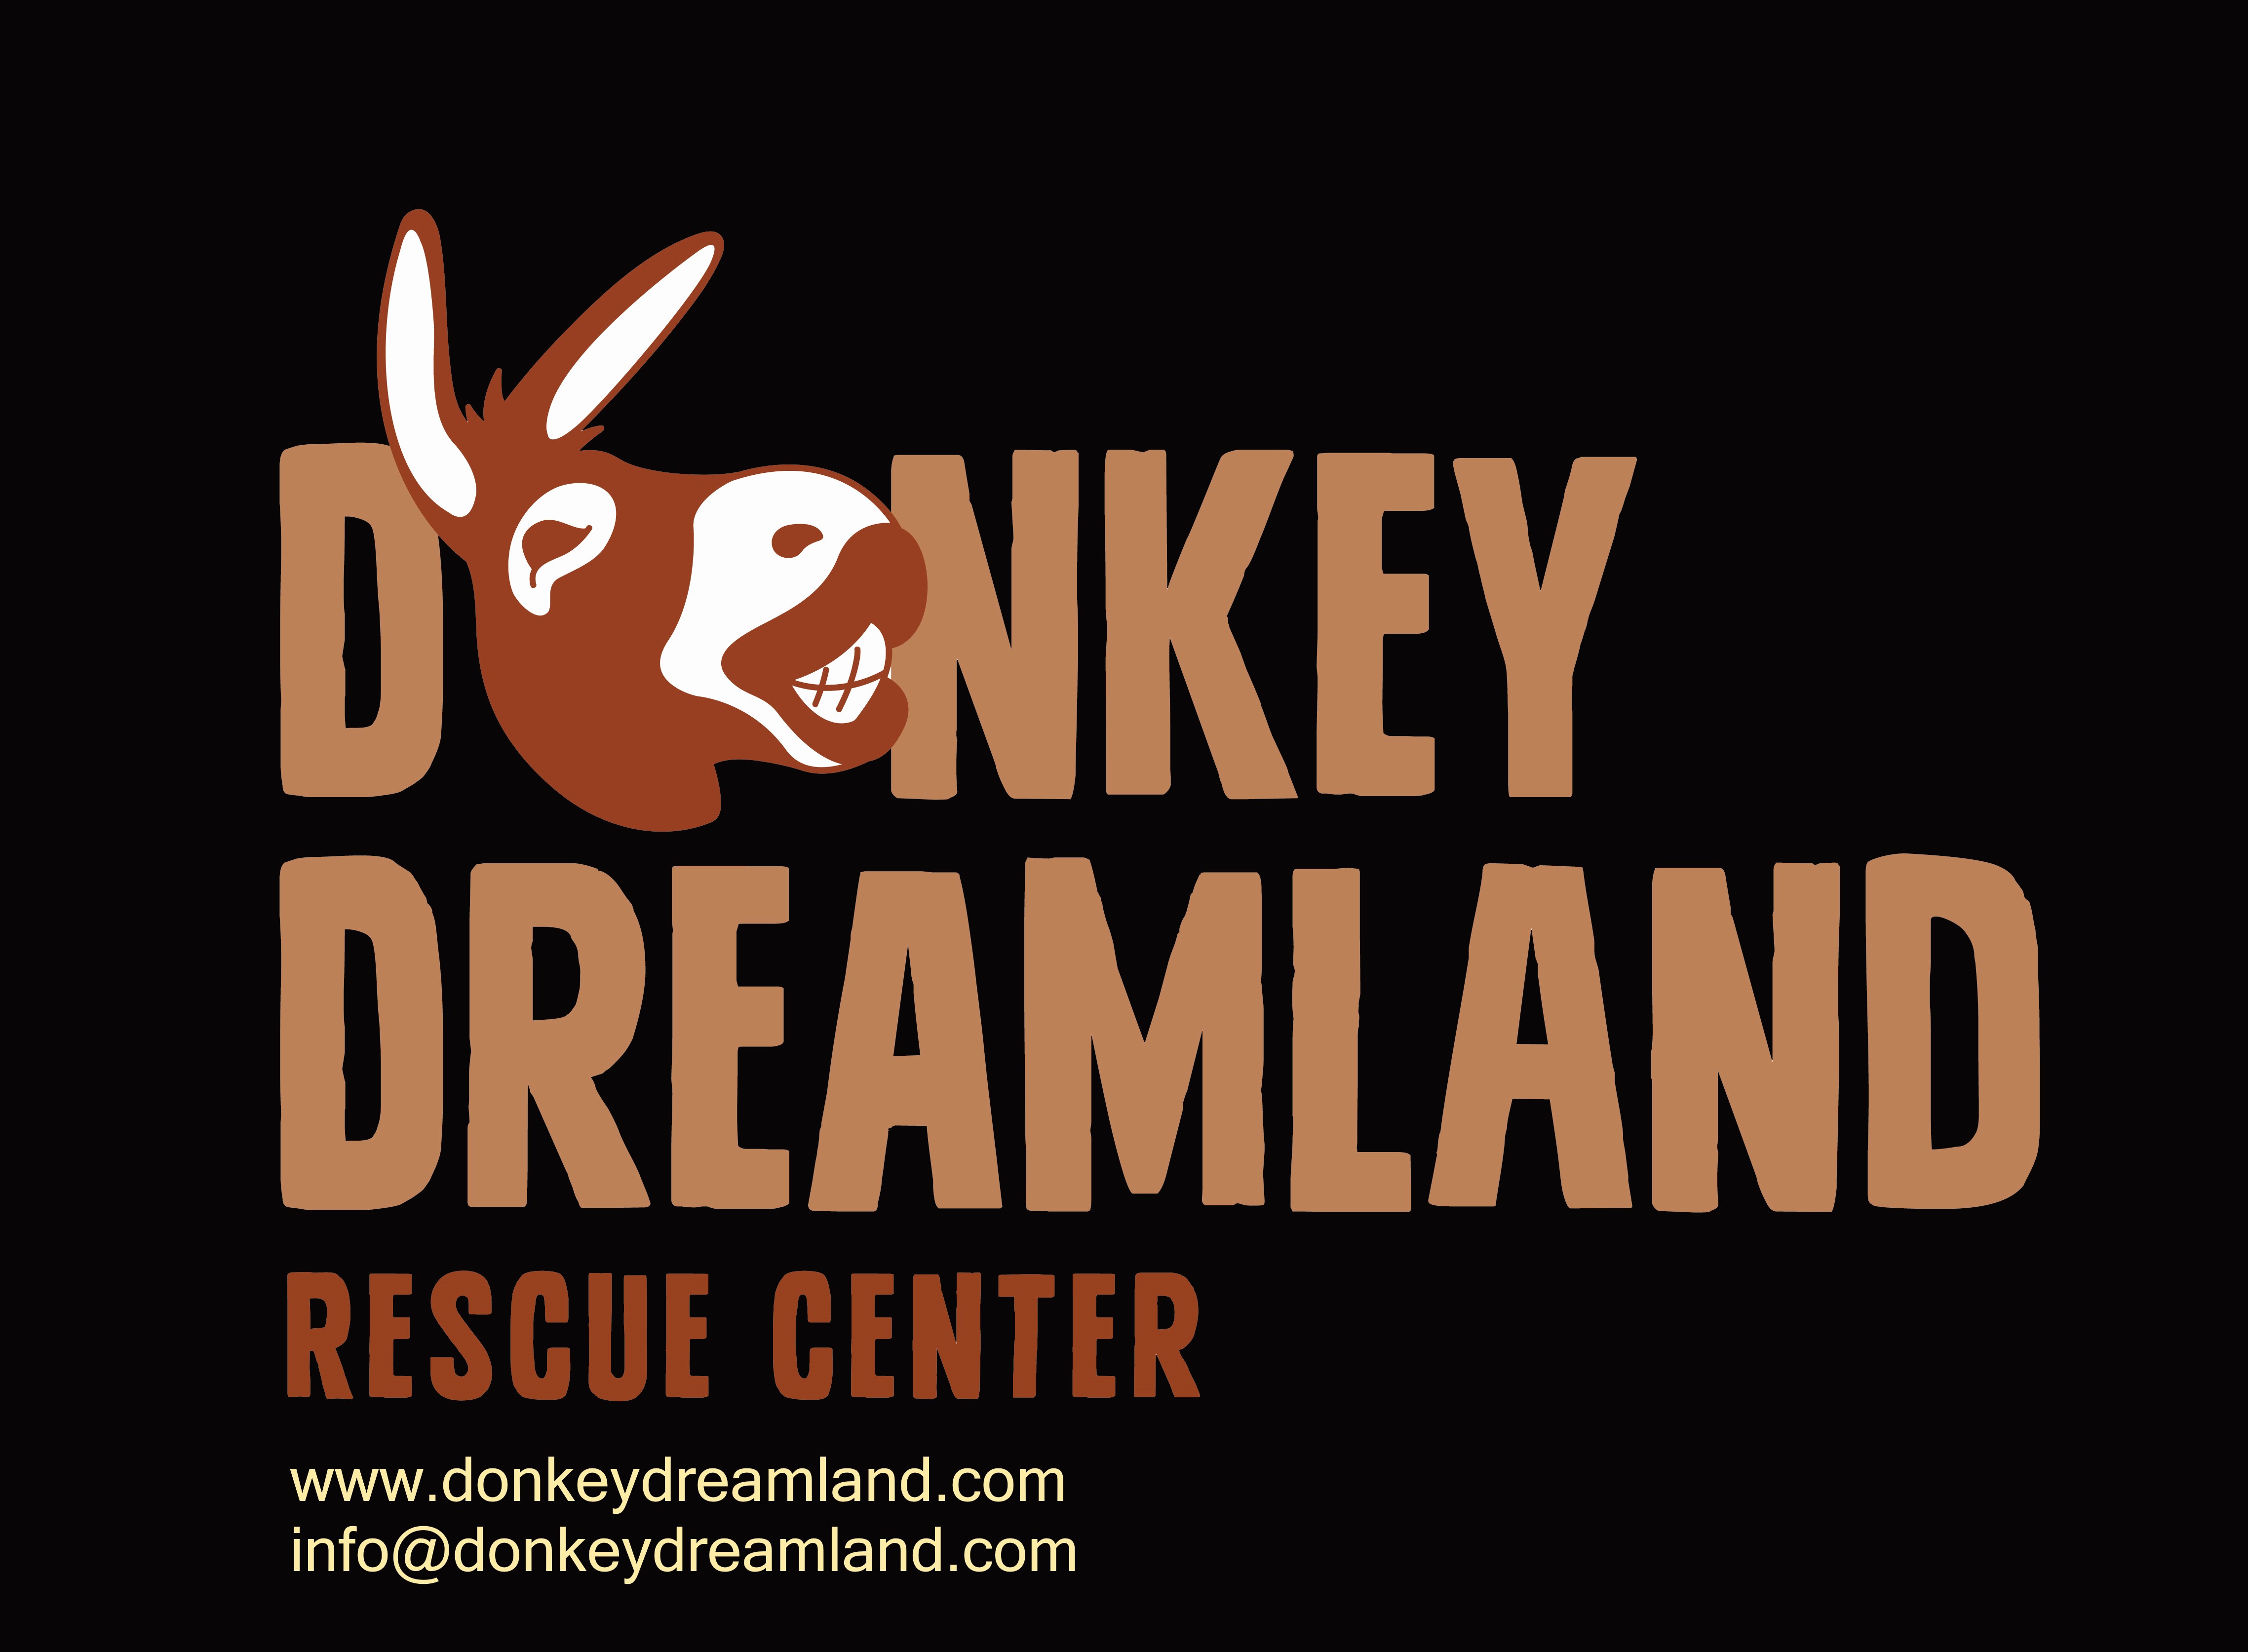 Donkey Dreamland